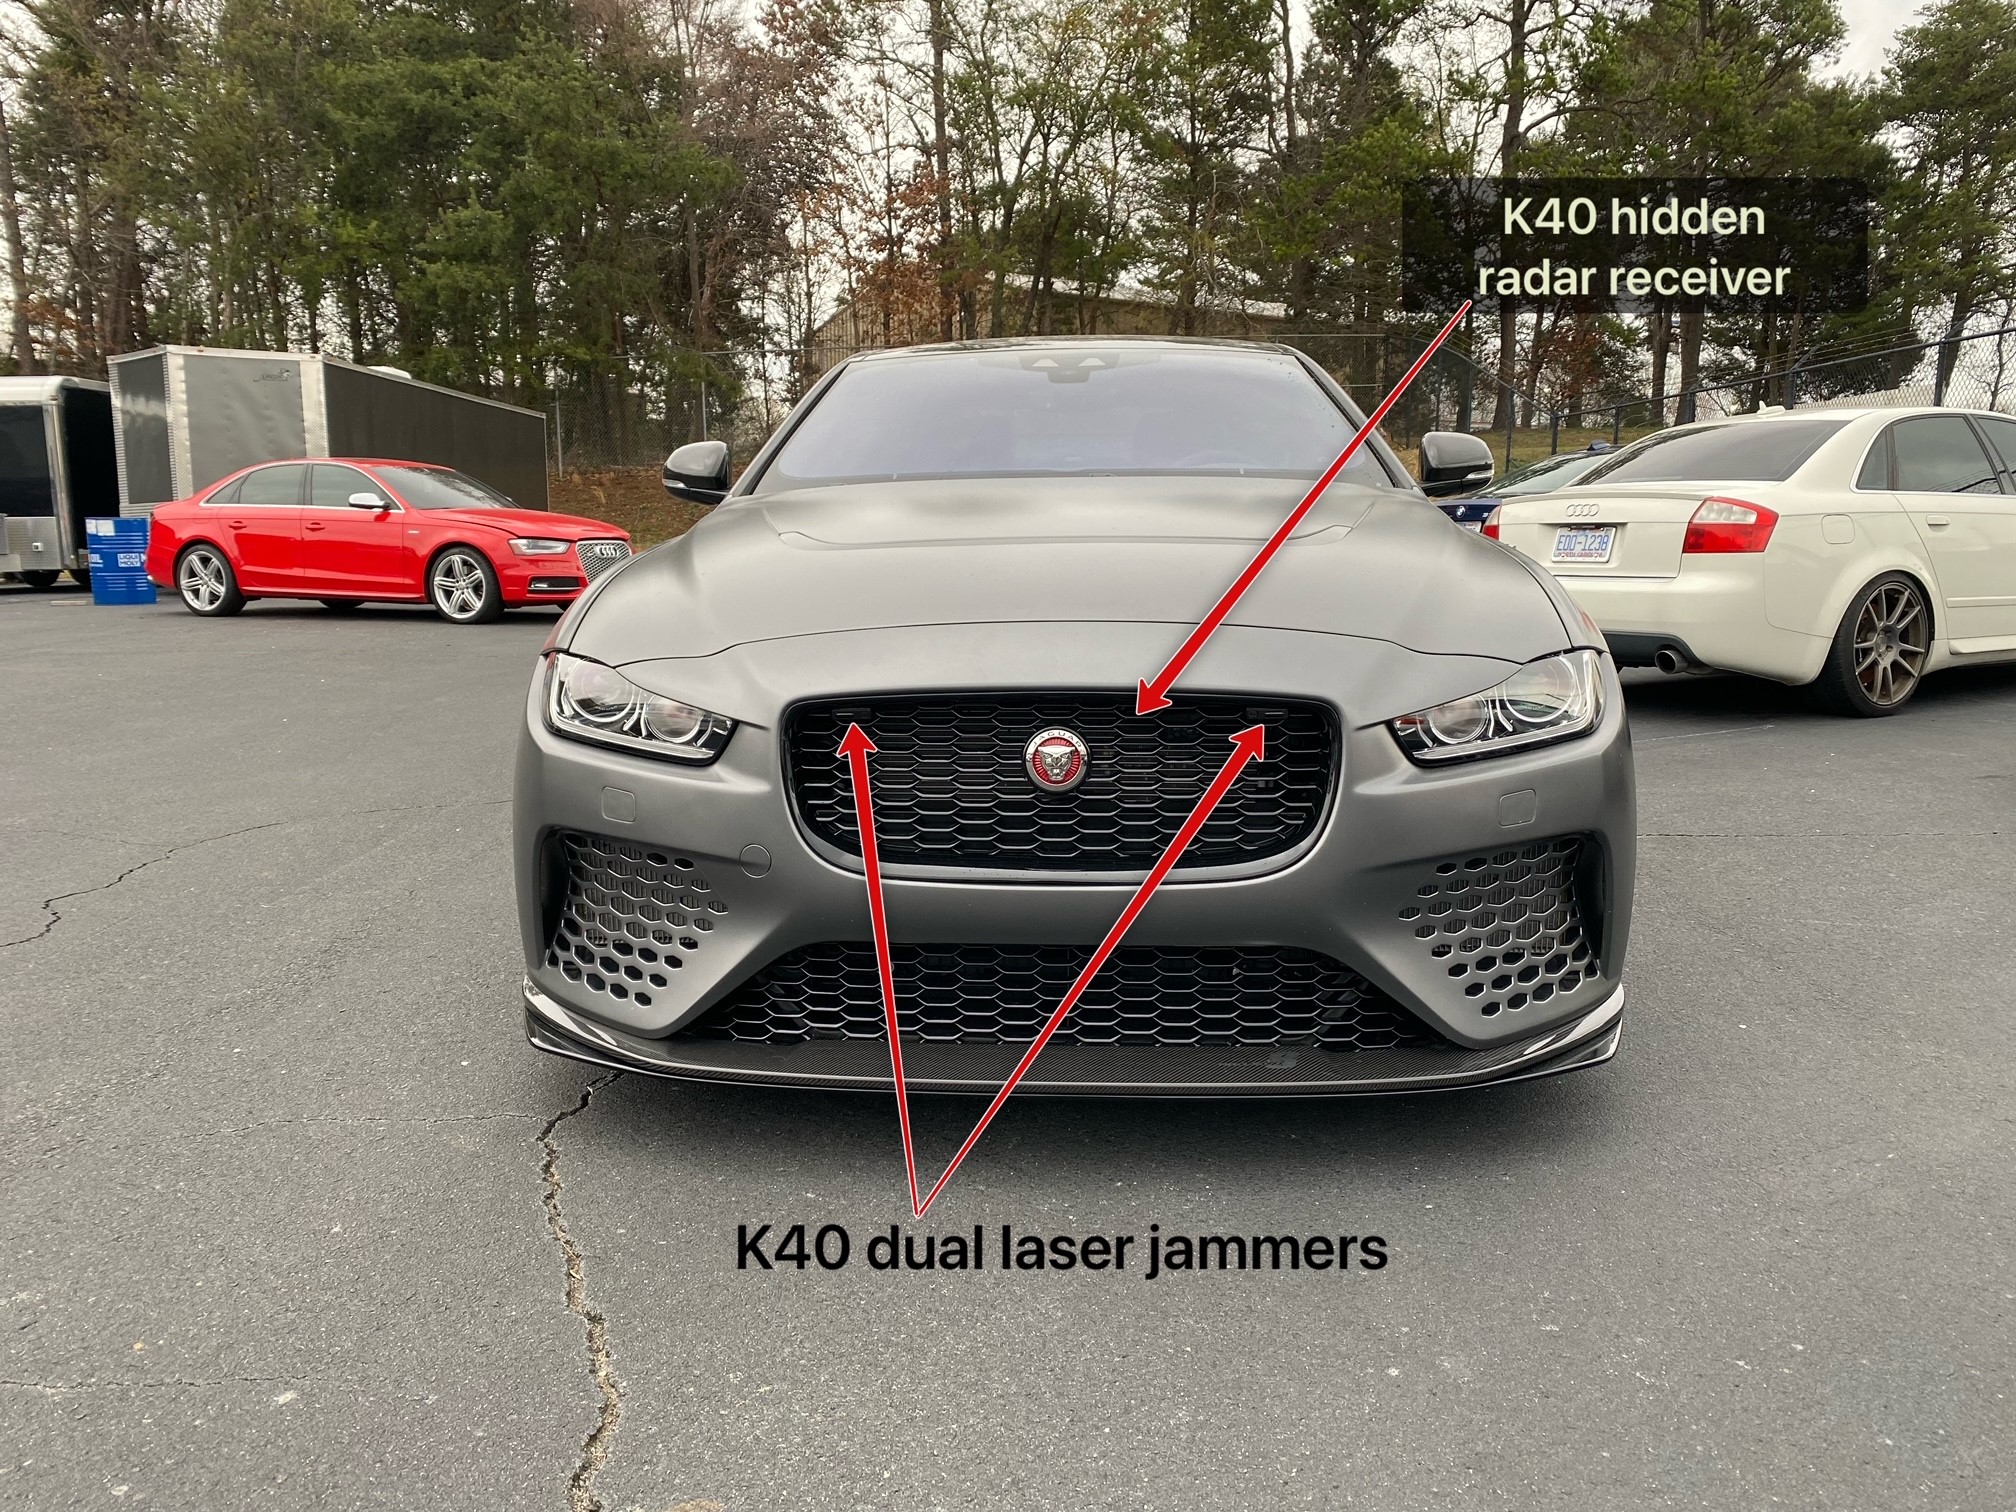 hidden front k40 radar receiver and laser jammers on a 2019 Jaguar XE Project 8